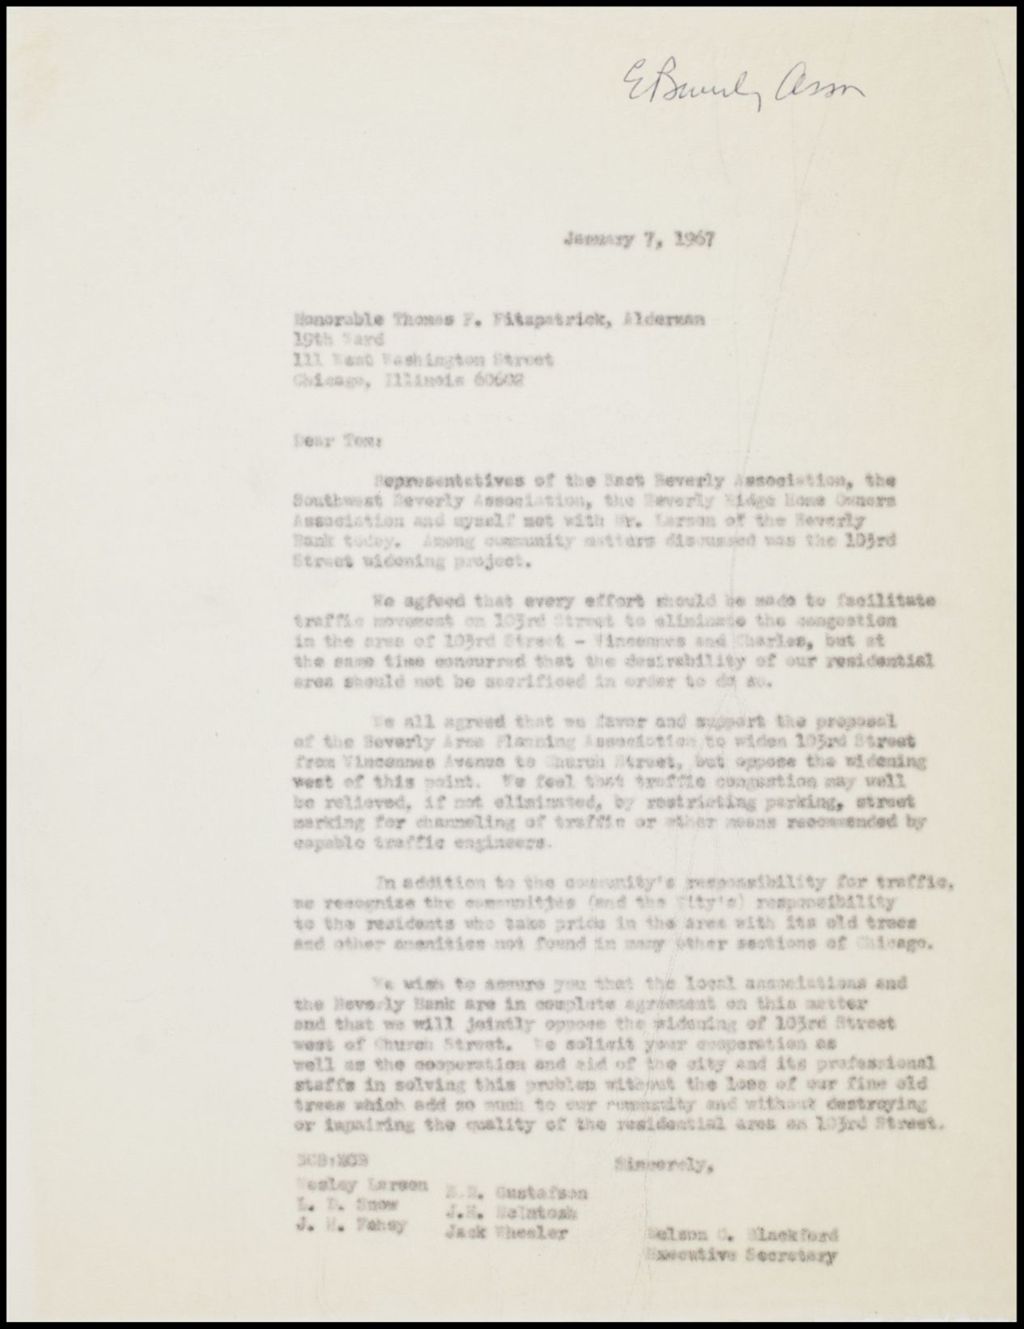 Miniature of East Beverly Association - correspondence, 1967 (Folder 95)